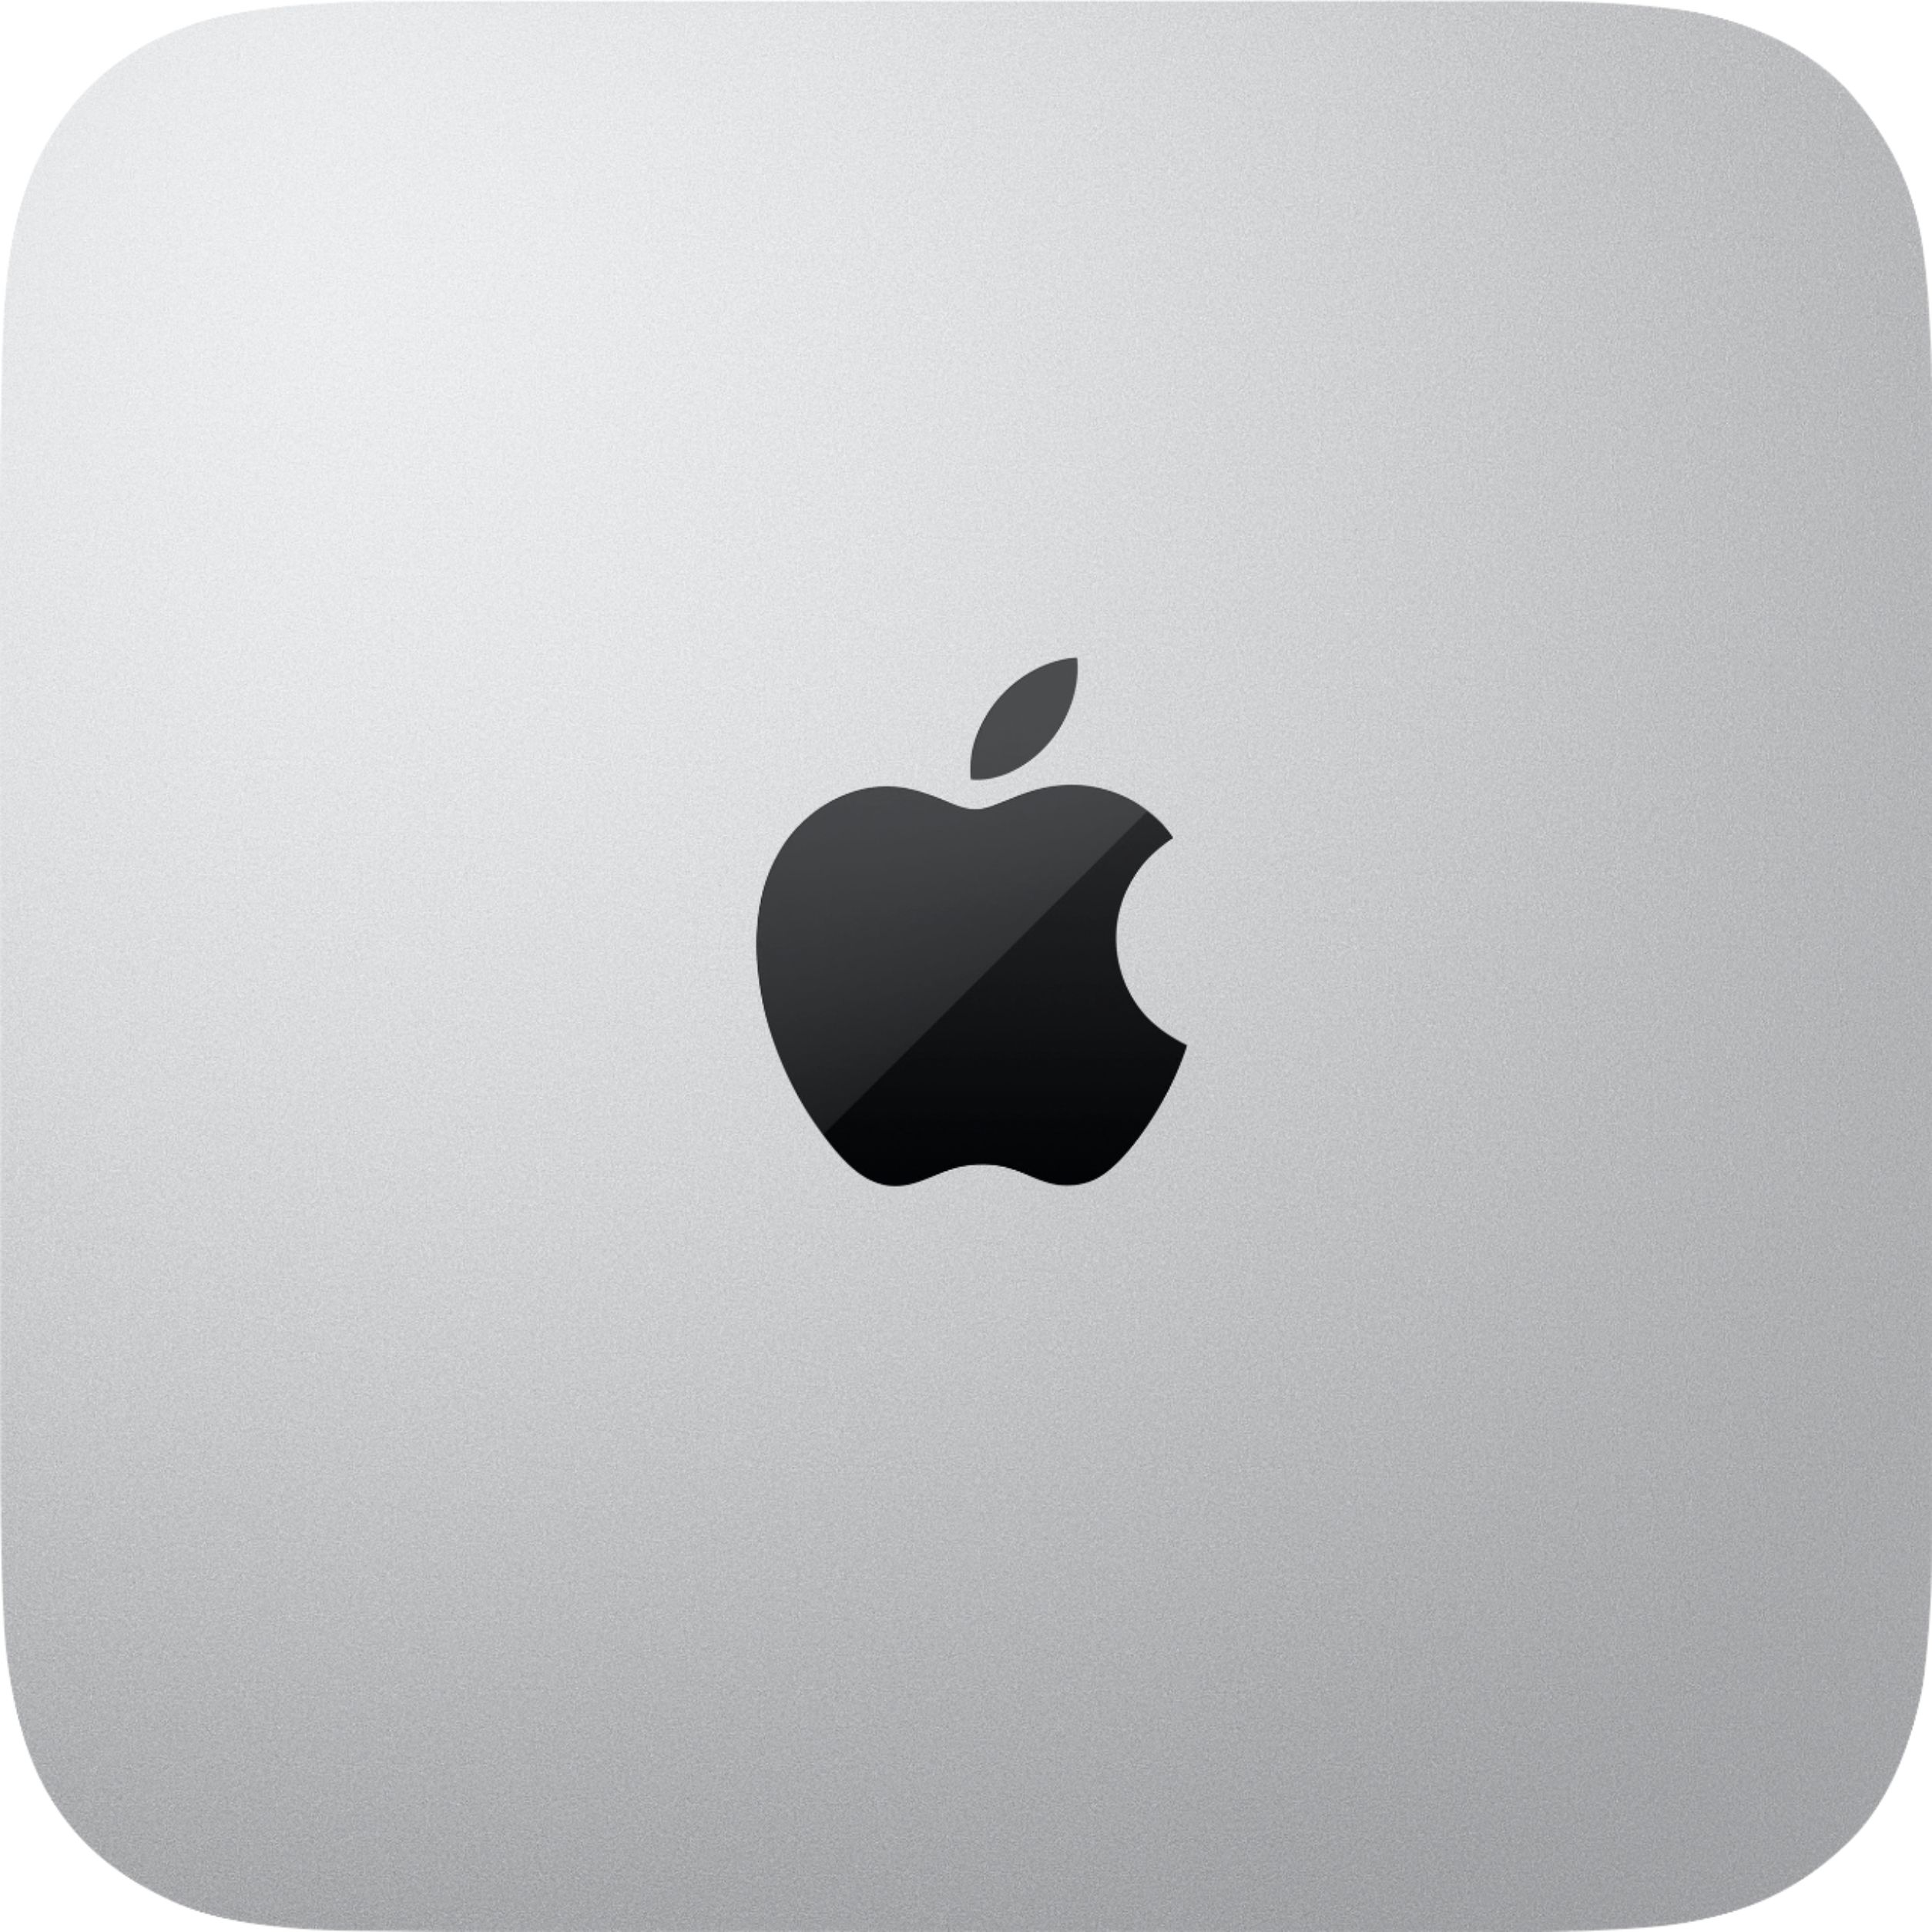 Costco Members: Apple Mac mini M1 Chip 8G/256G $599.99, 8G/512G $749.99 $599.98